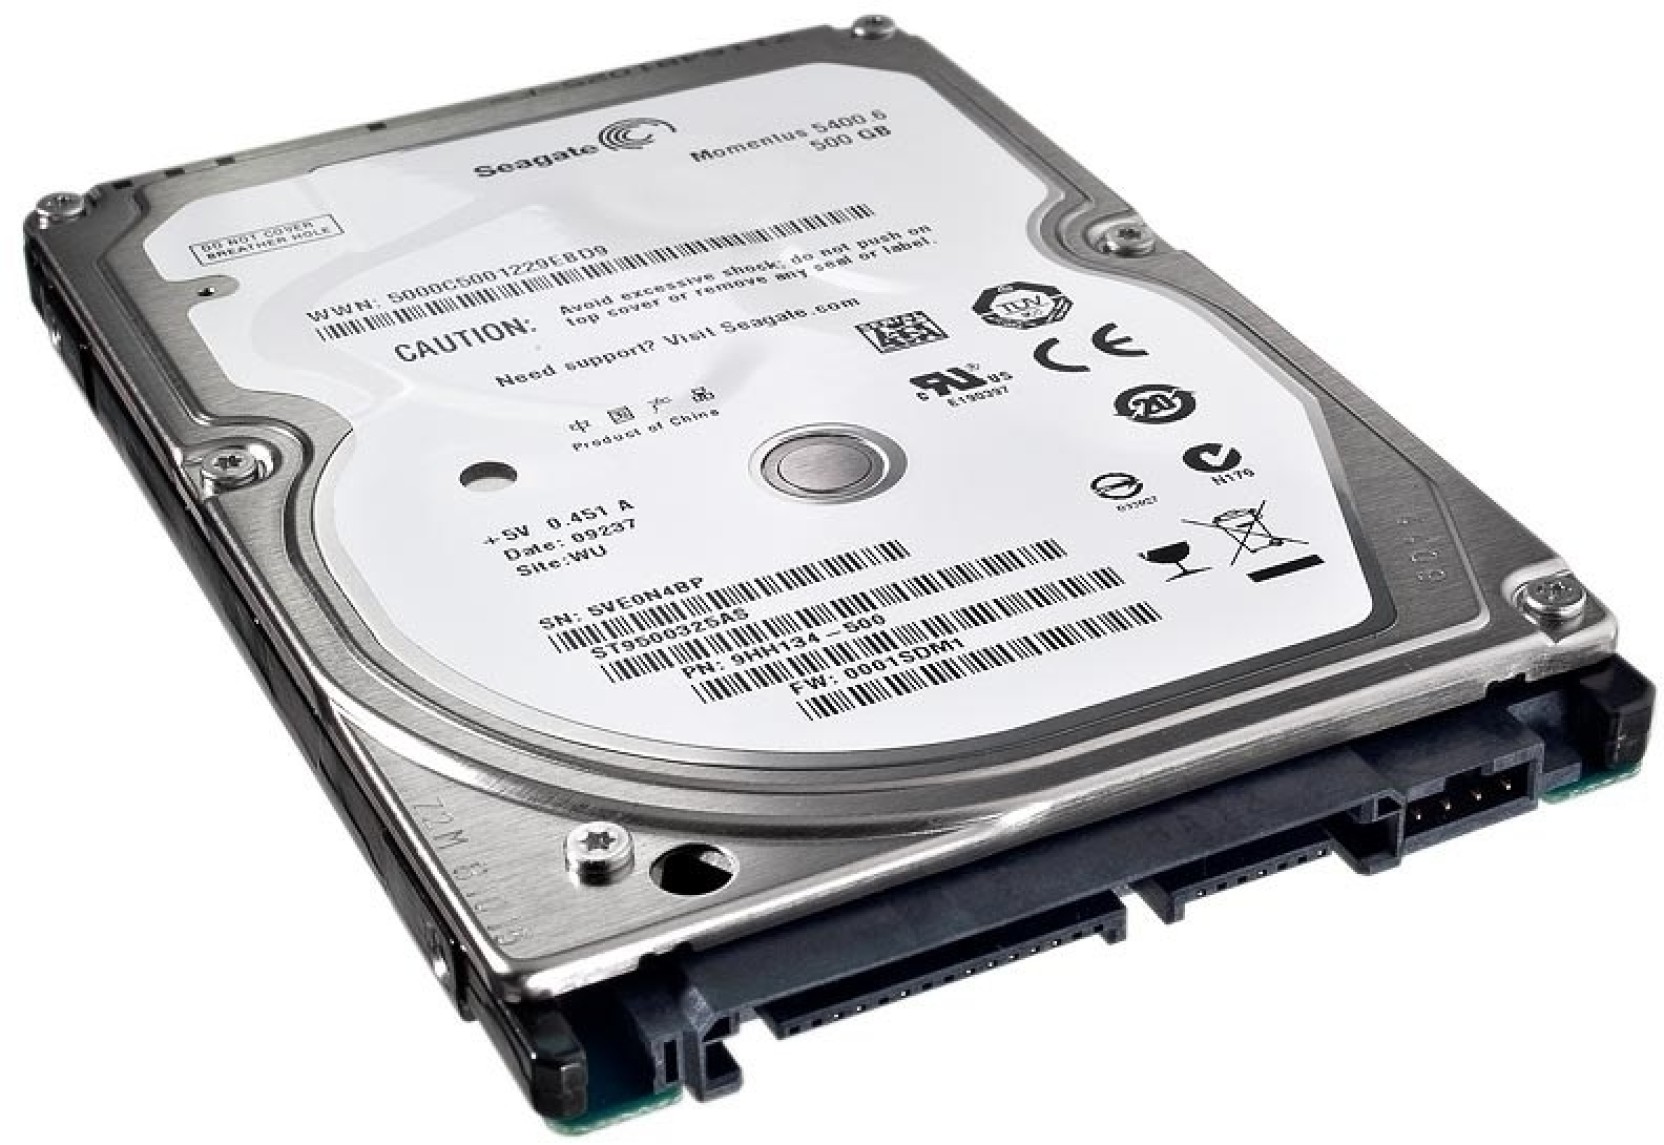 Seagate Momentus 500 GB Laptop Internal Hard Disk Drive (ST9500325AS